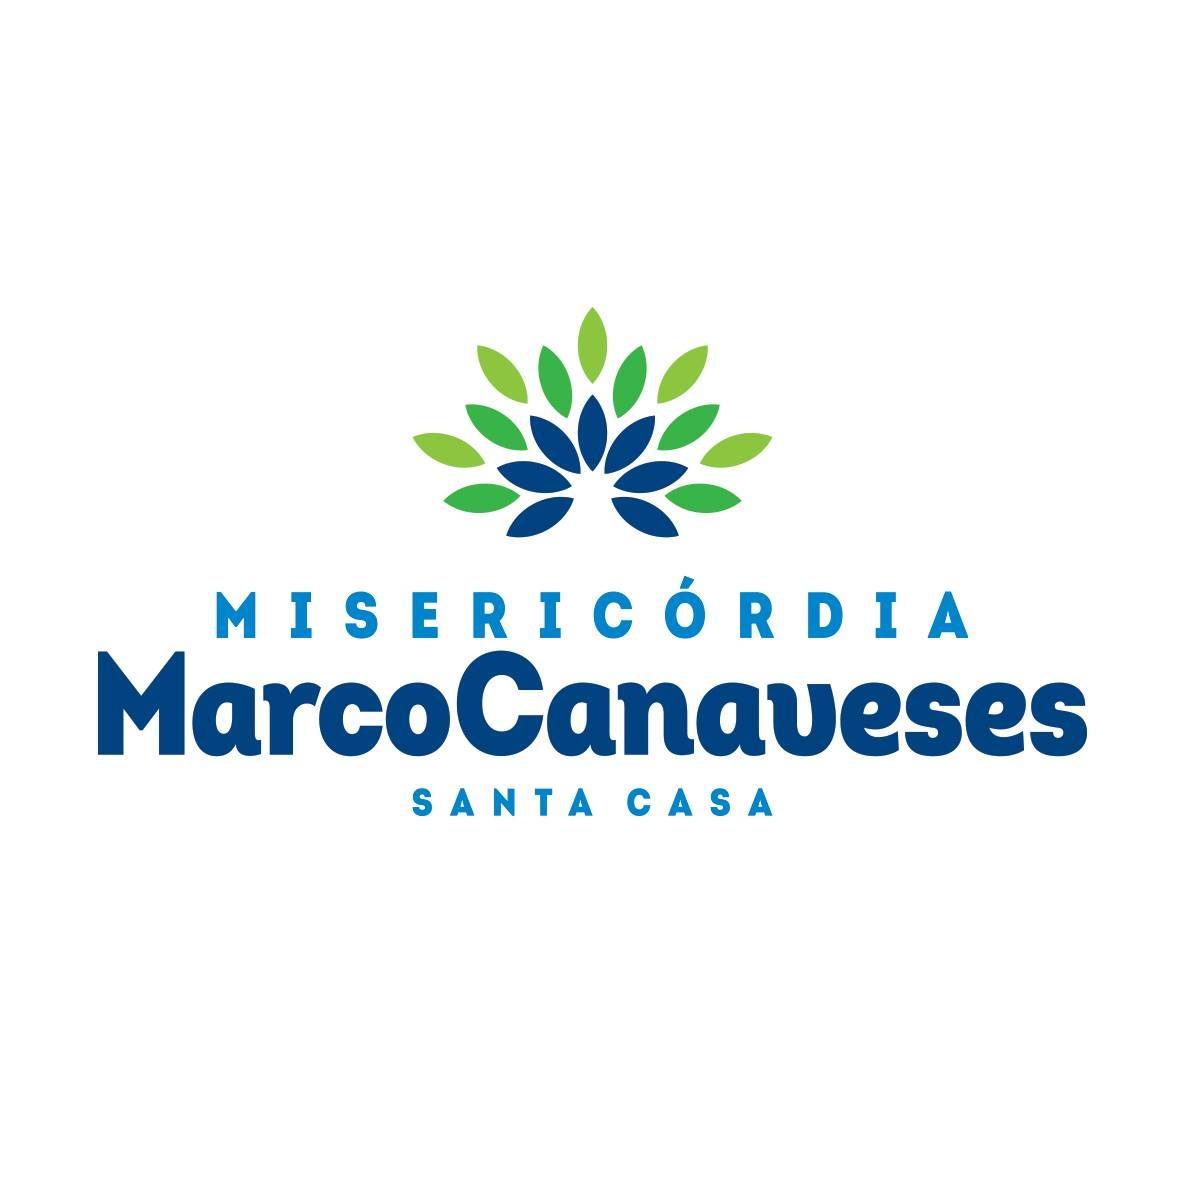 Santa Casa Misericórdia Marco Canaveses